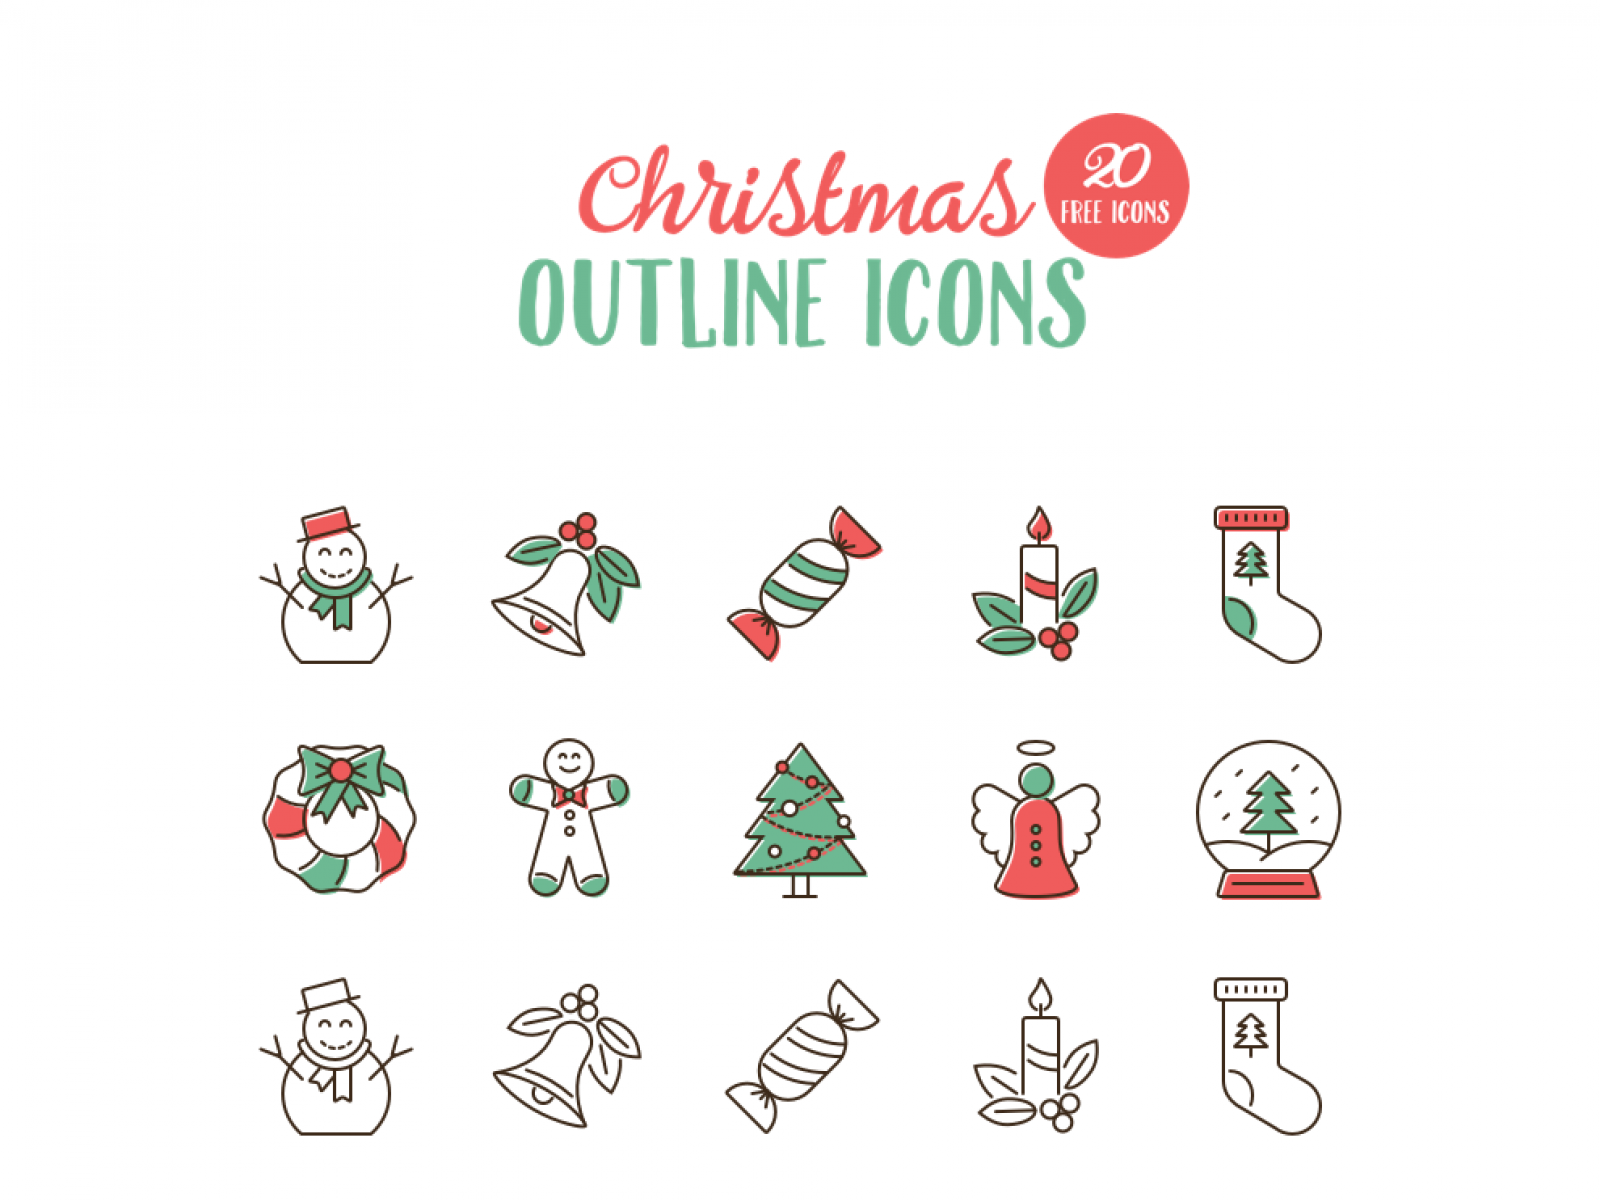 20 Christmas Outline Icons for Figma and Adobe XD